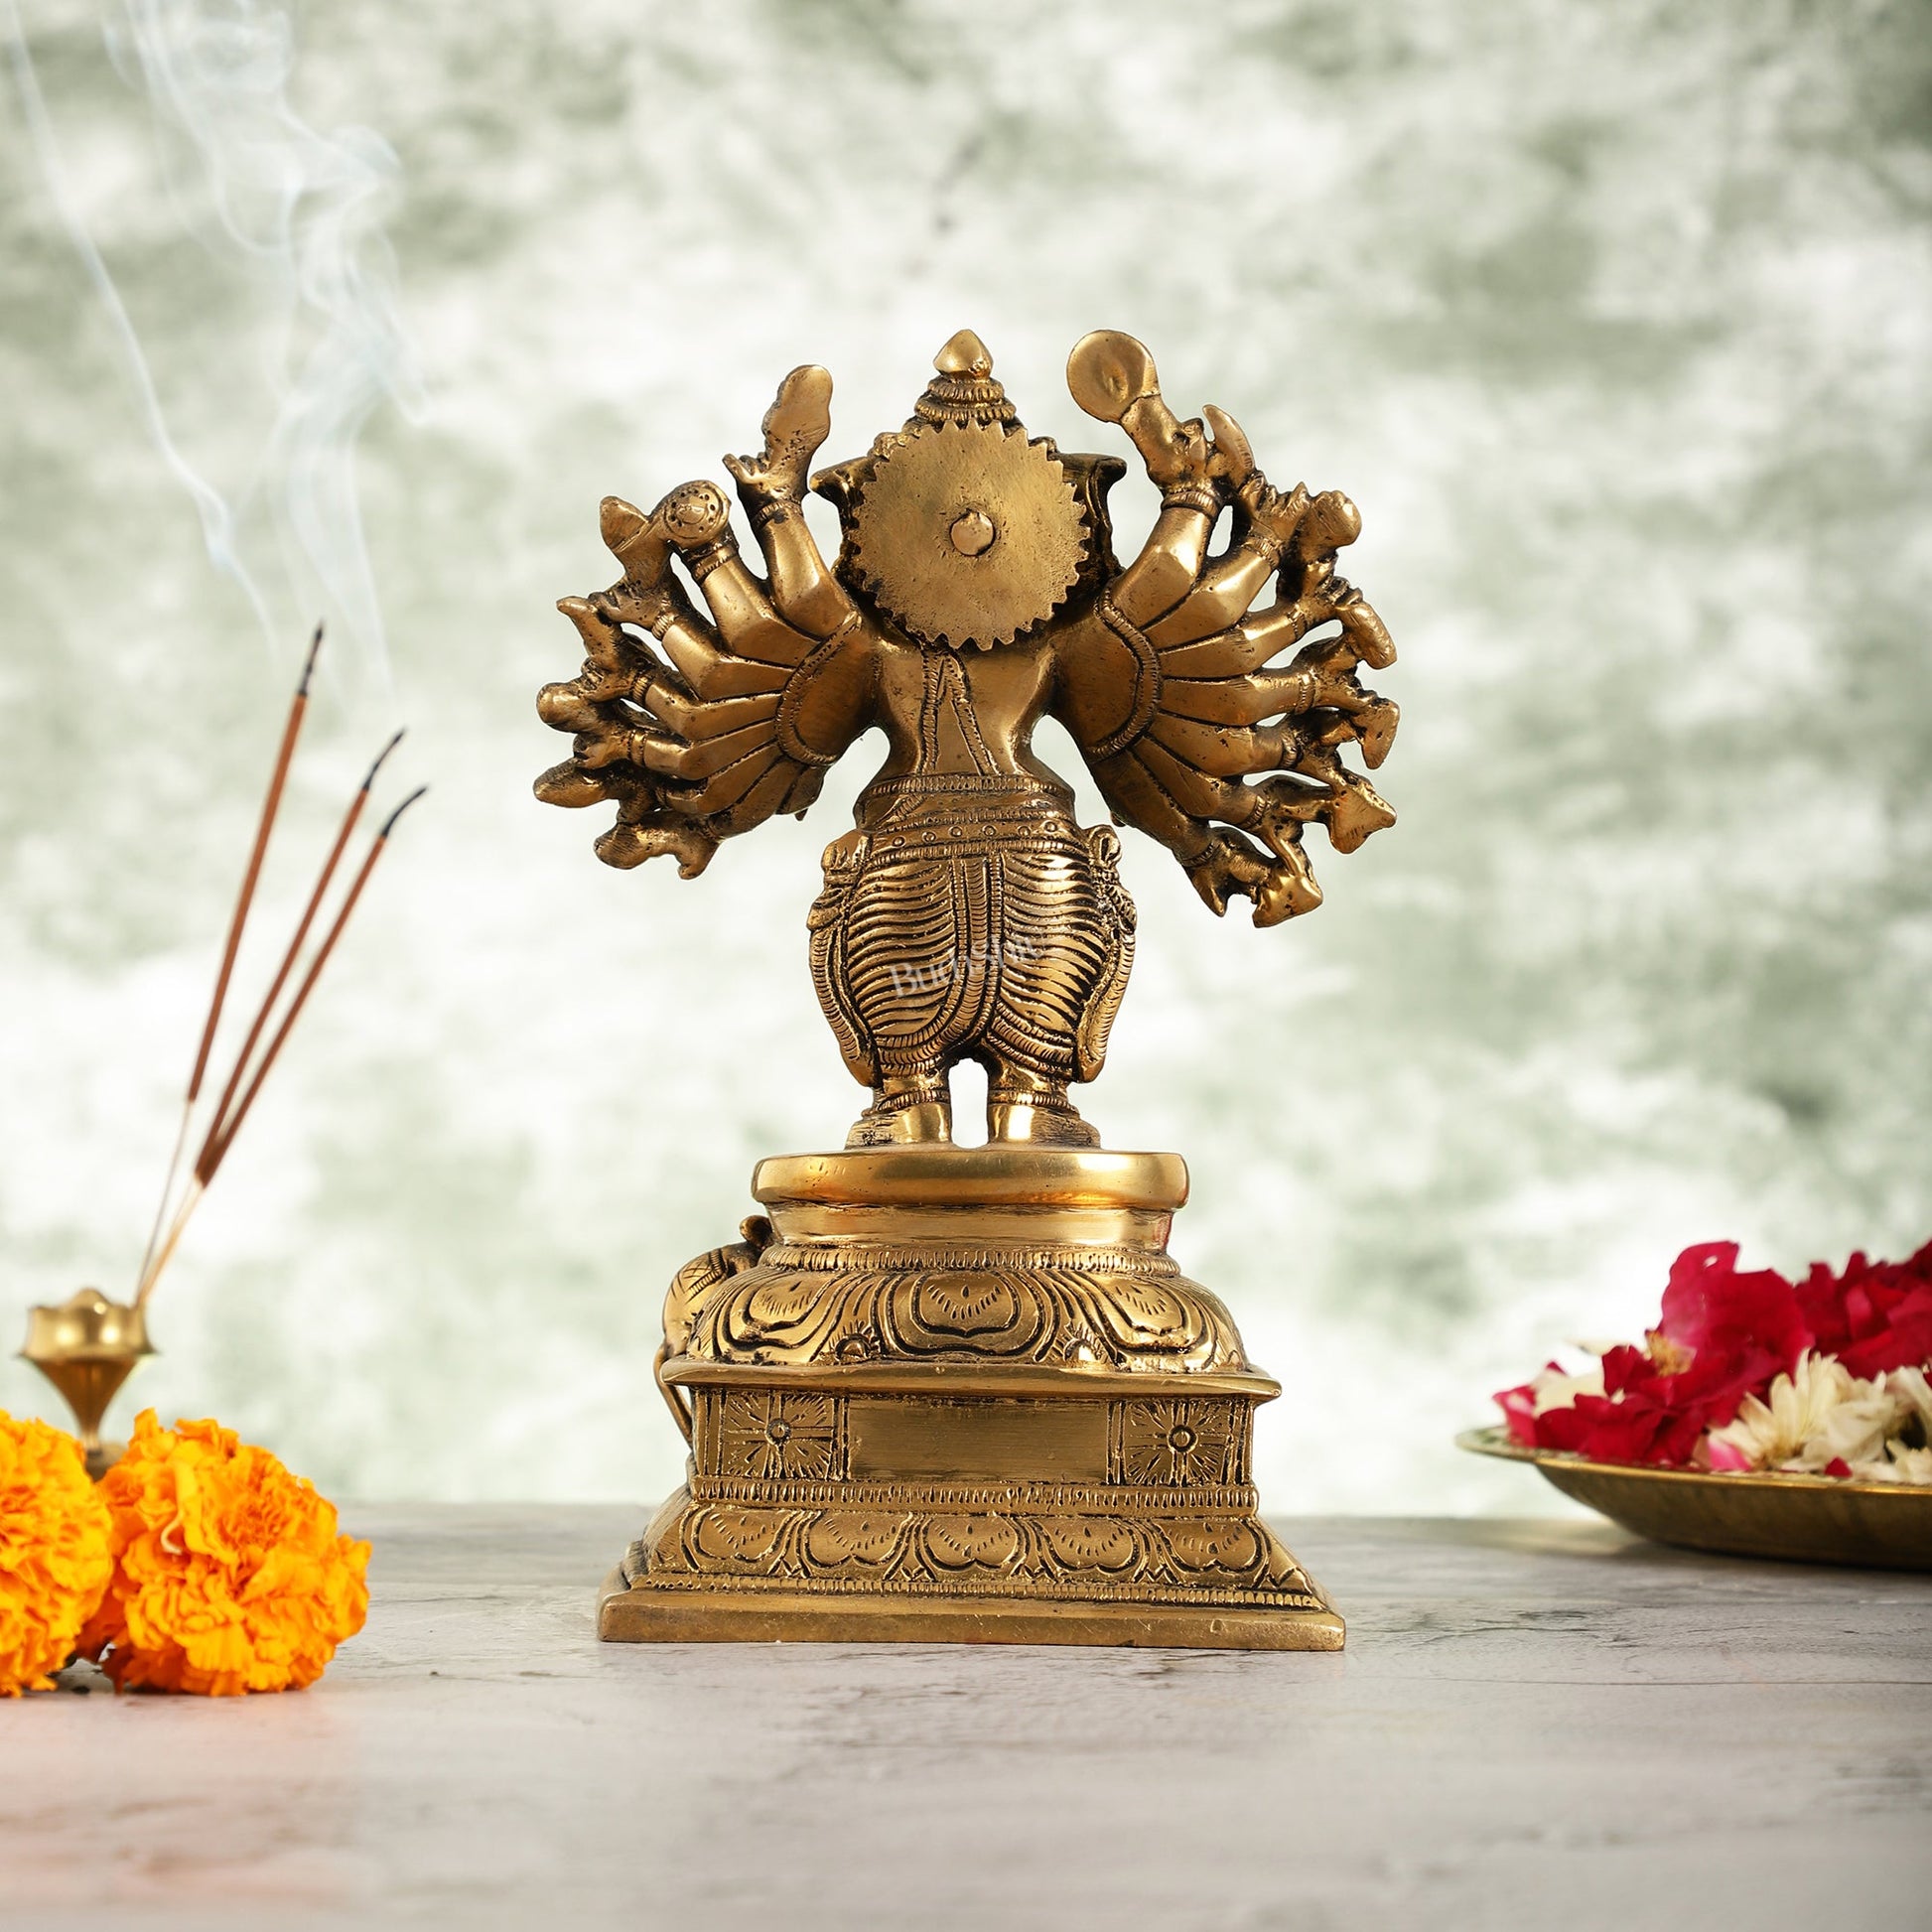 Superfine Brass Standing Lord Ganesha Idol with 16 Arms - 8.5 Inch - Budhshiv.com